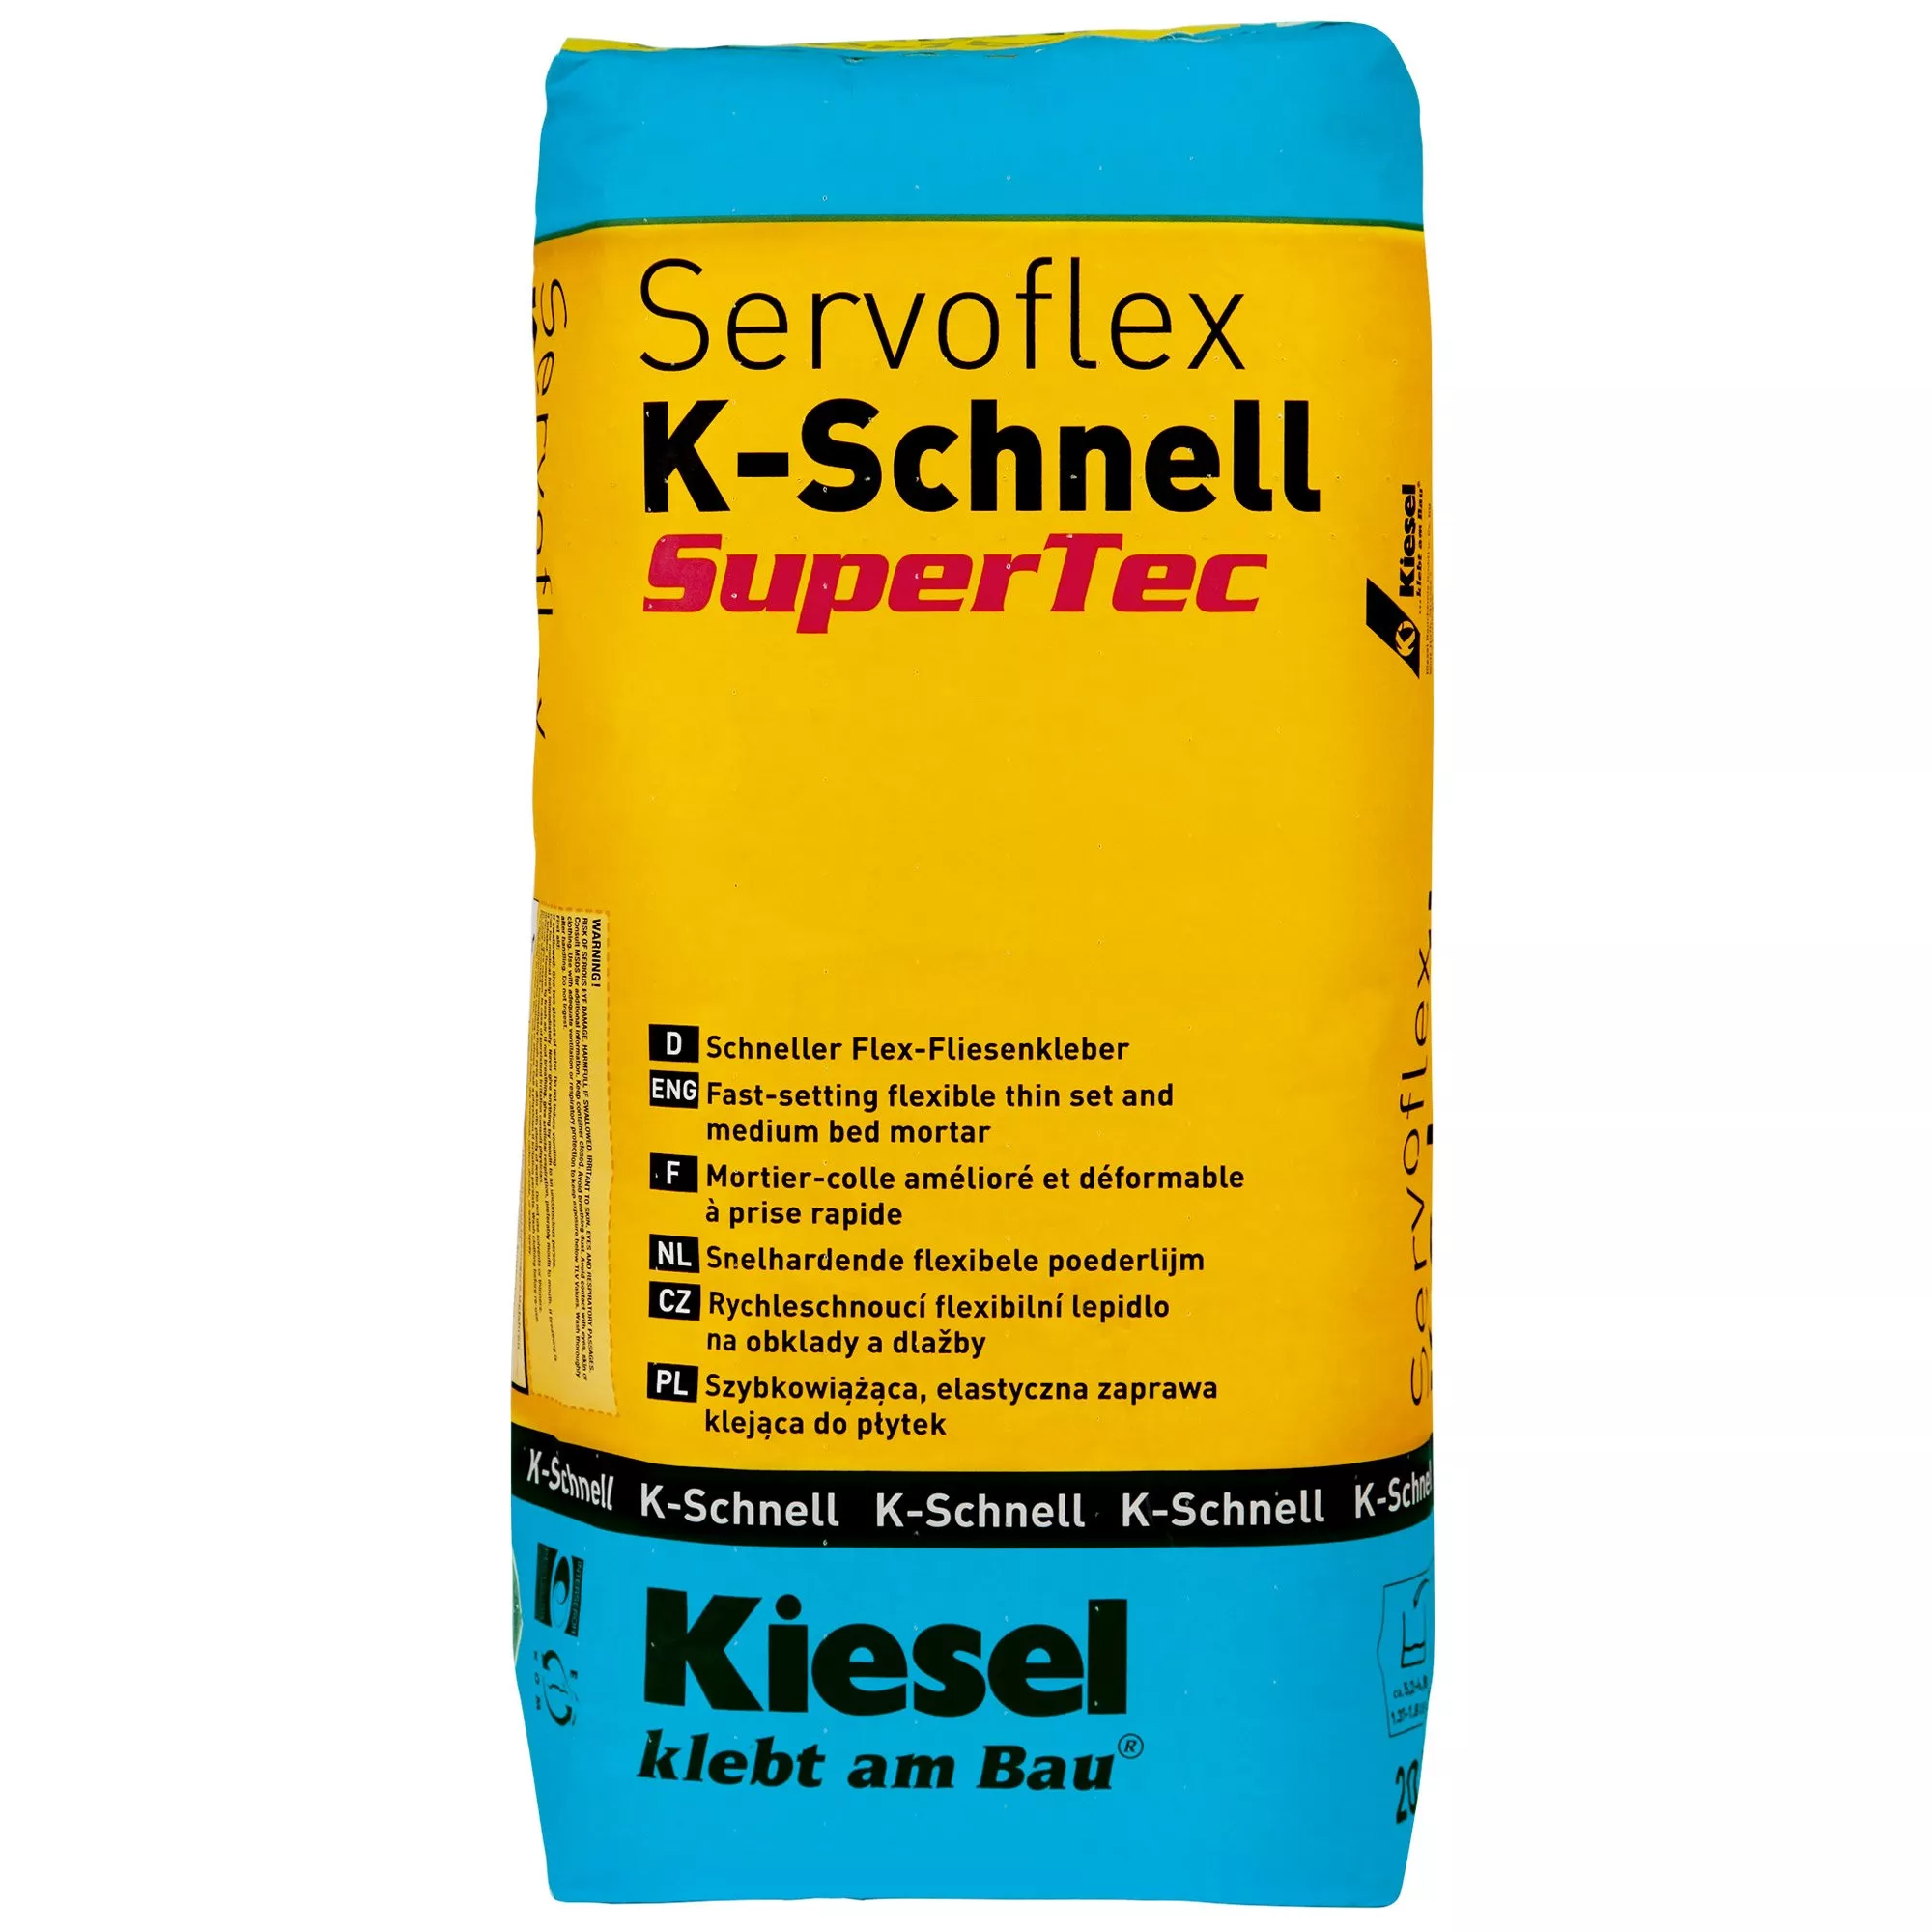 Kiesel Servoflex K-Schnell - suurikokoiset päällysteet, nopea laattaliima (20 kg)